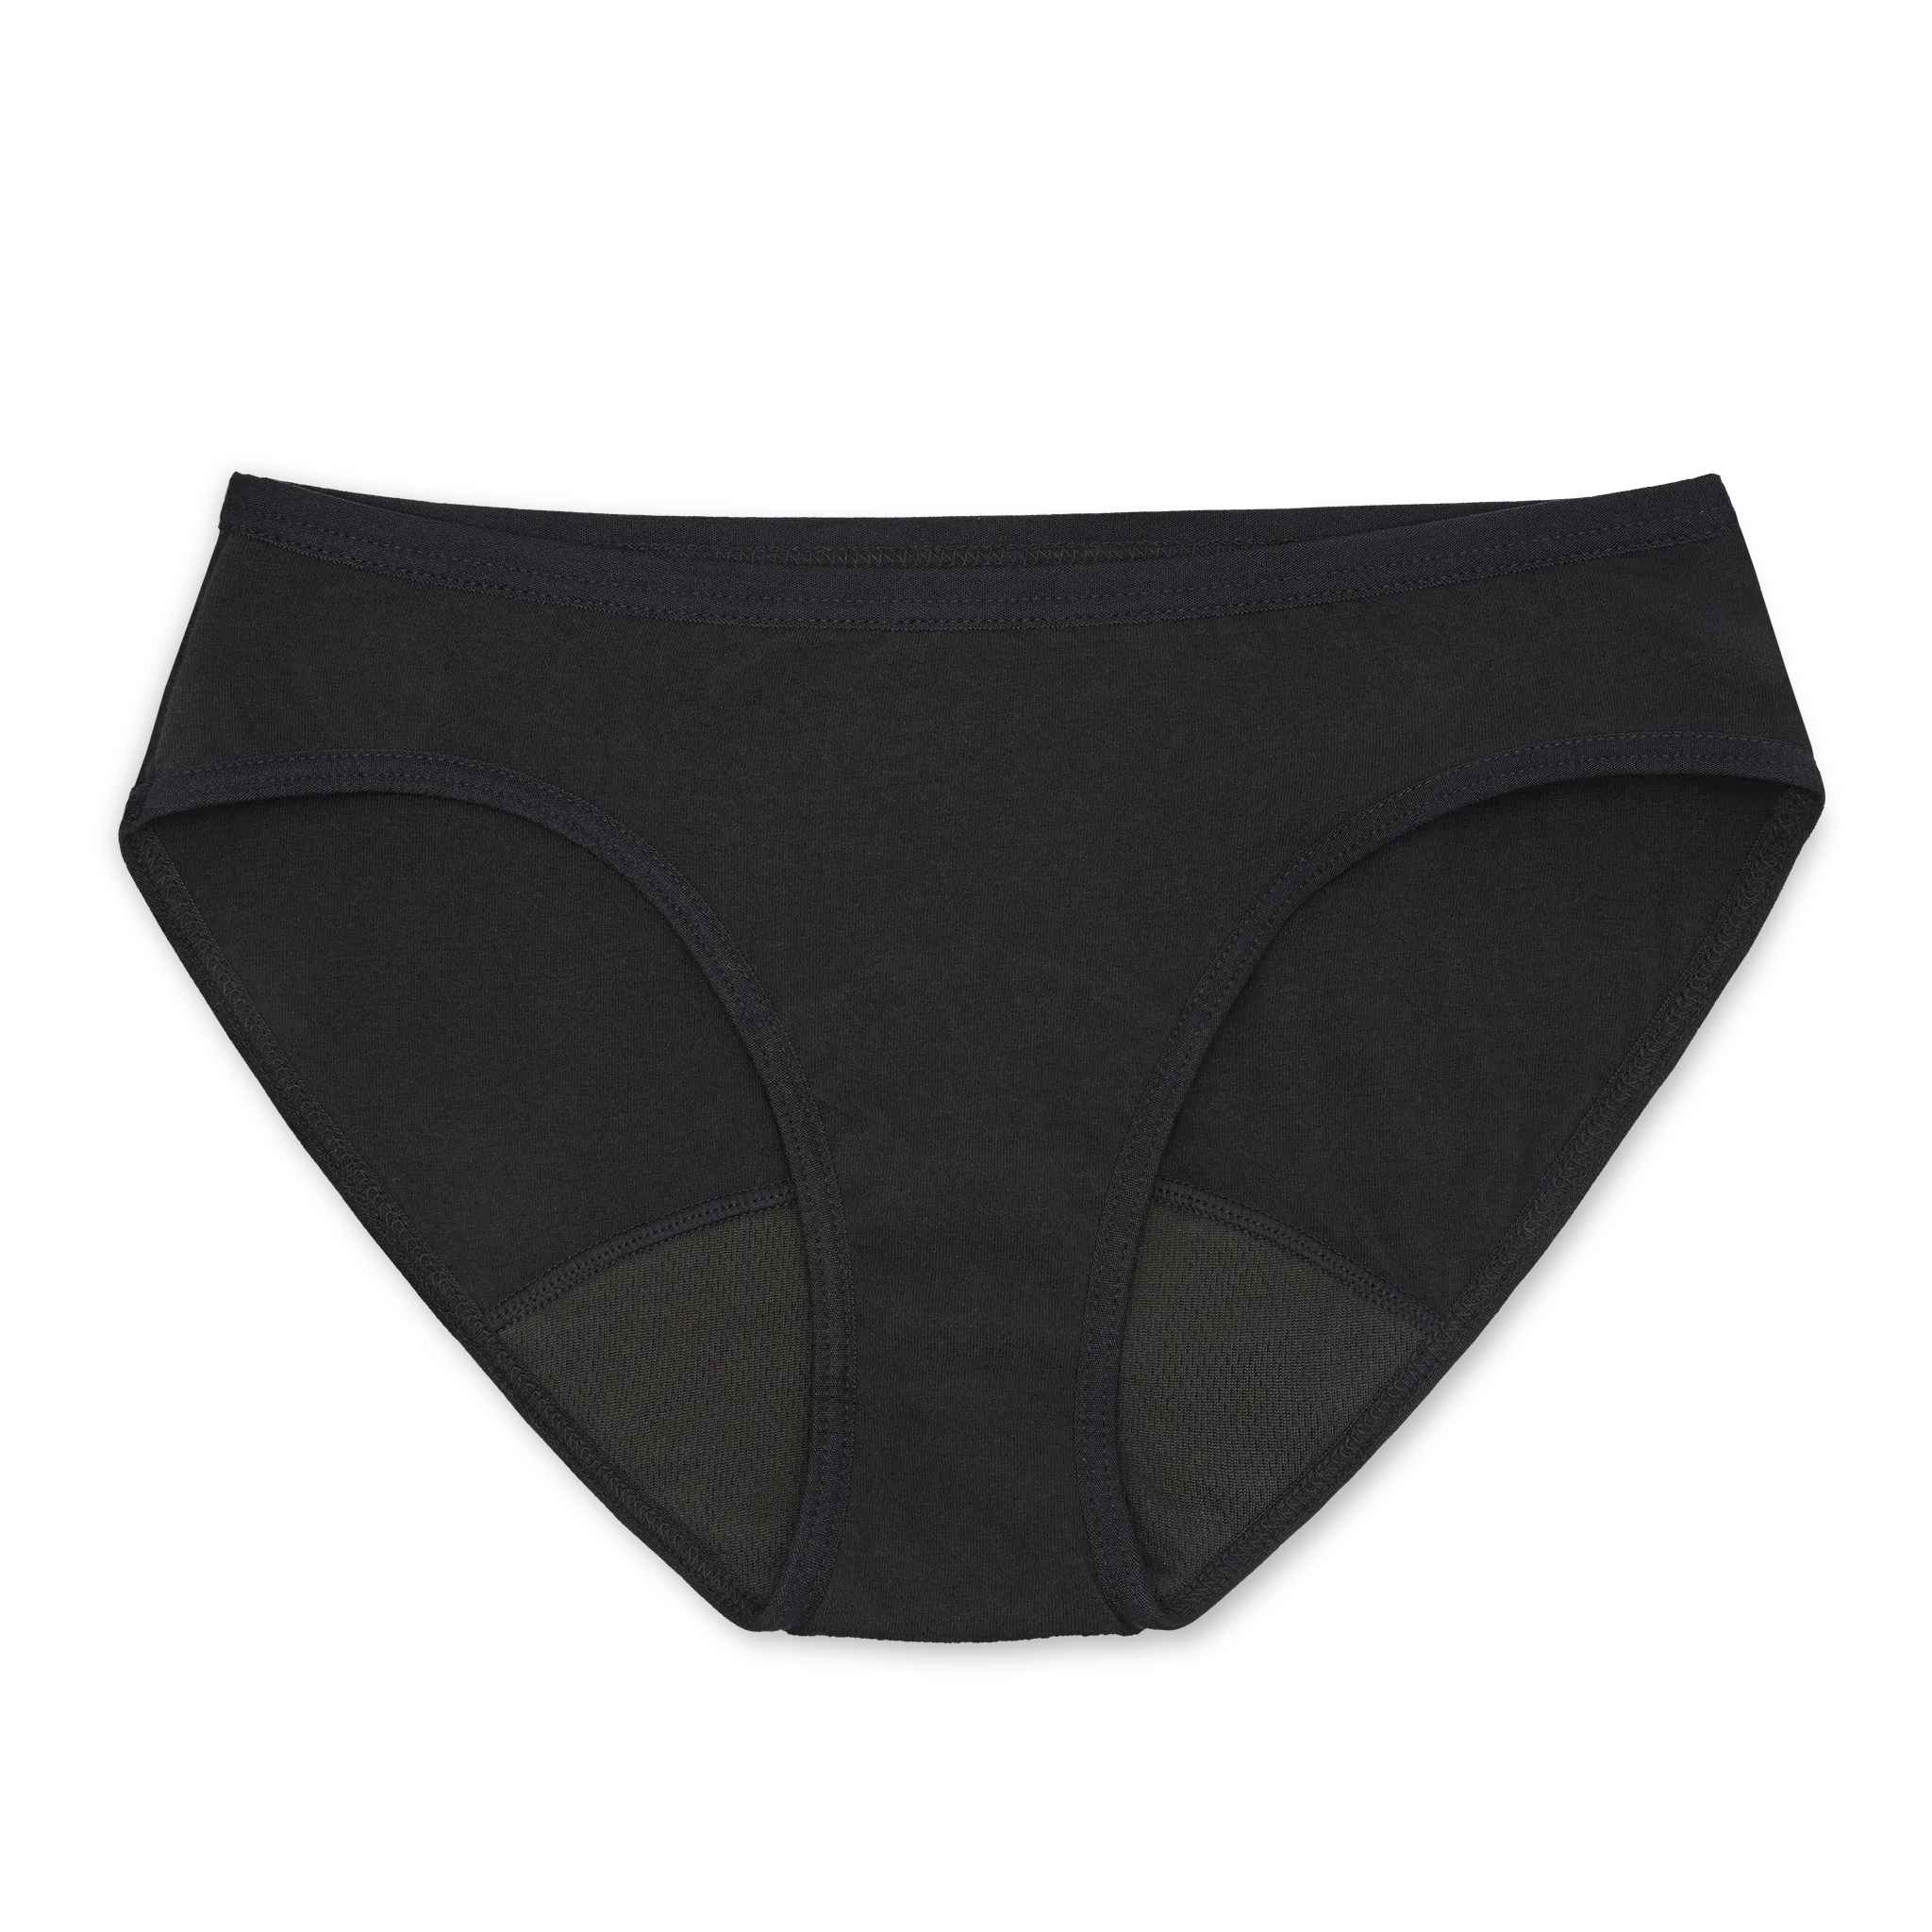 Pantys Period Underwear, grls bikini